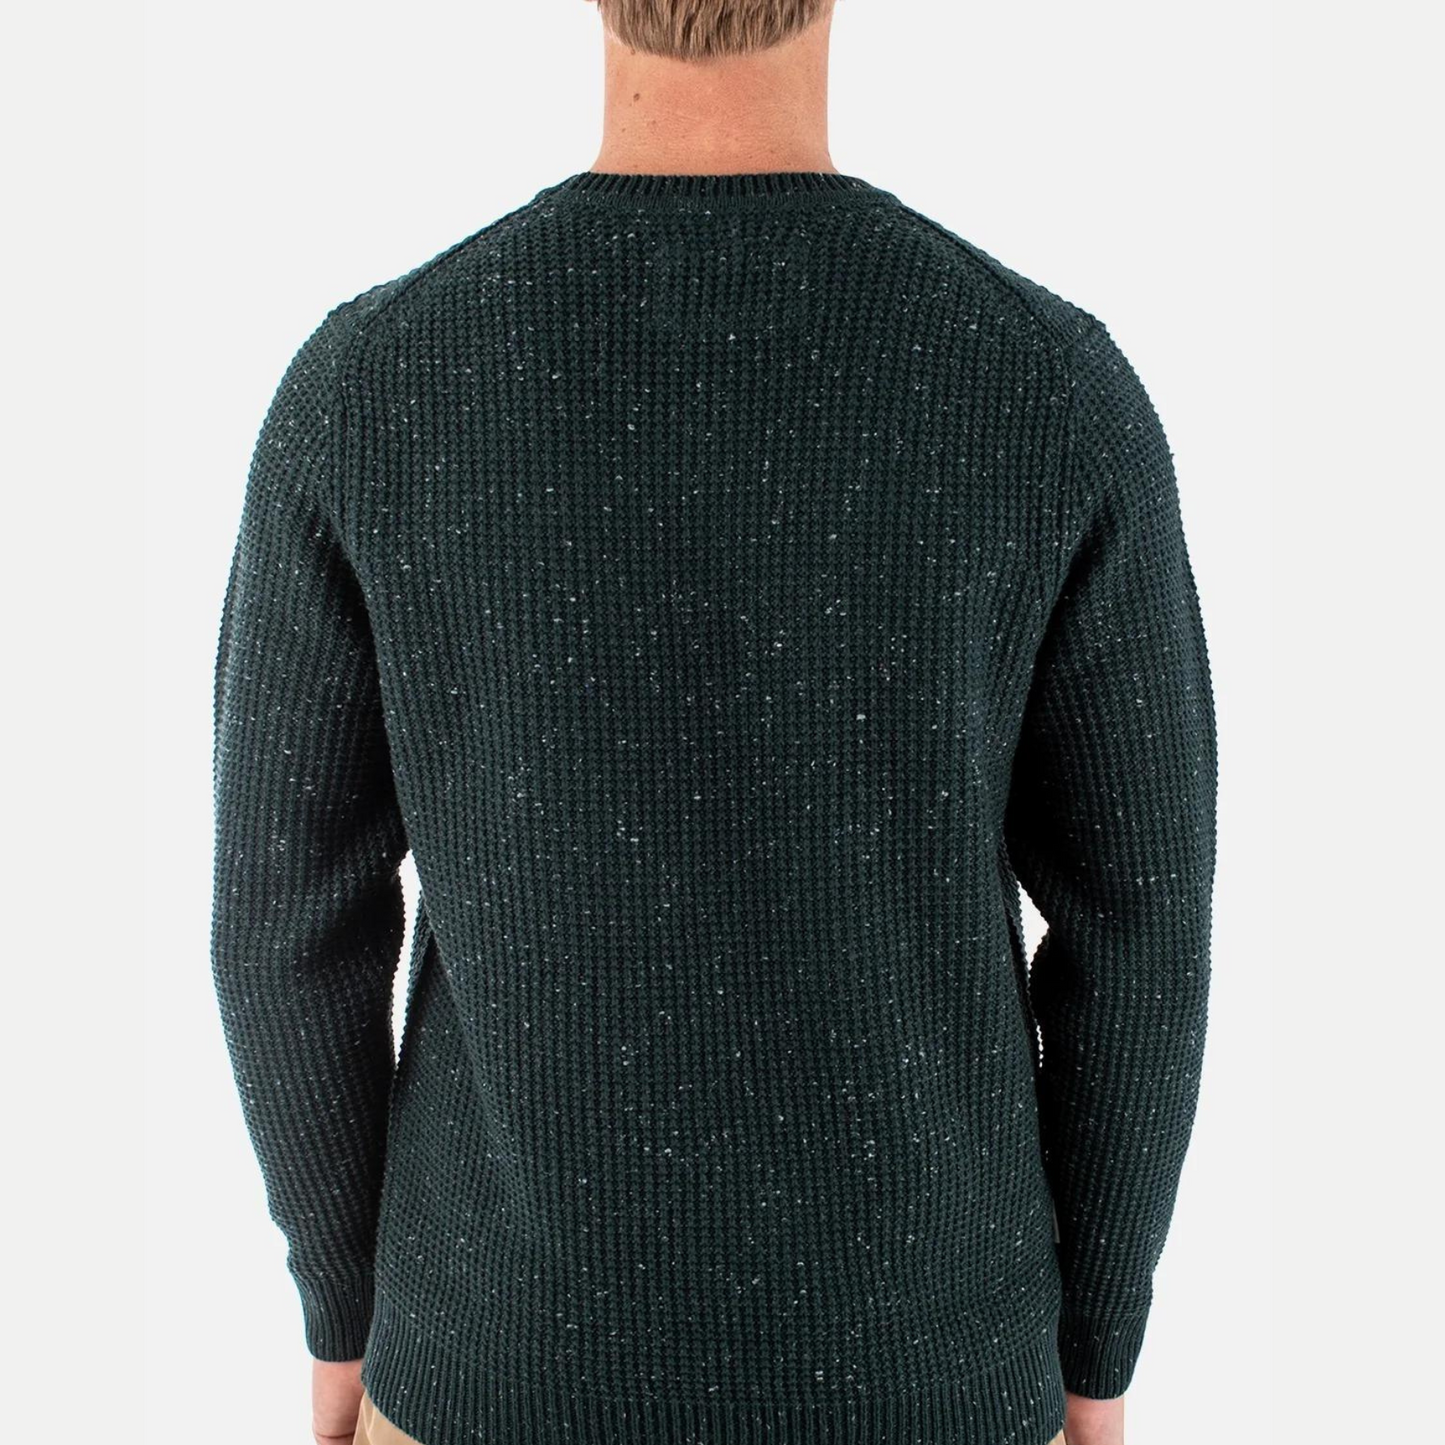 Men's dark green knit sweater